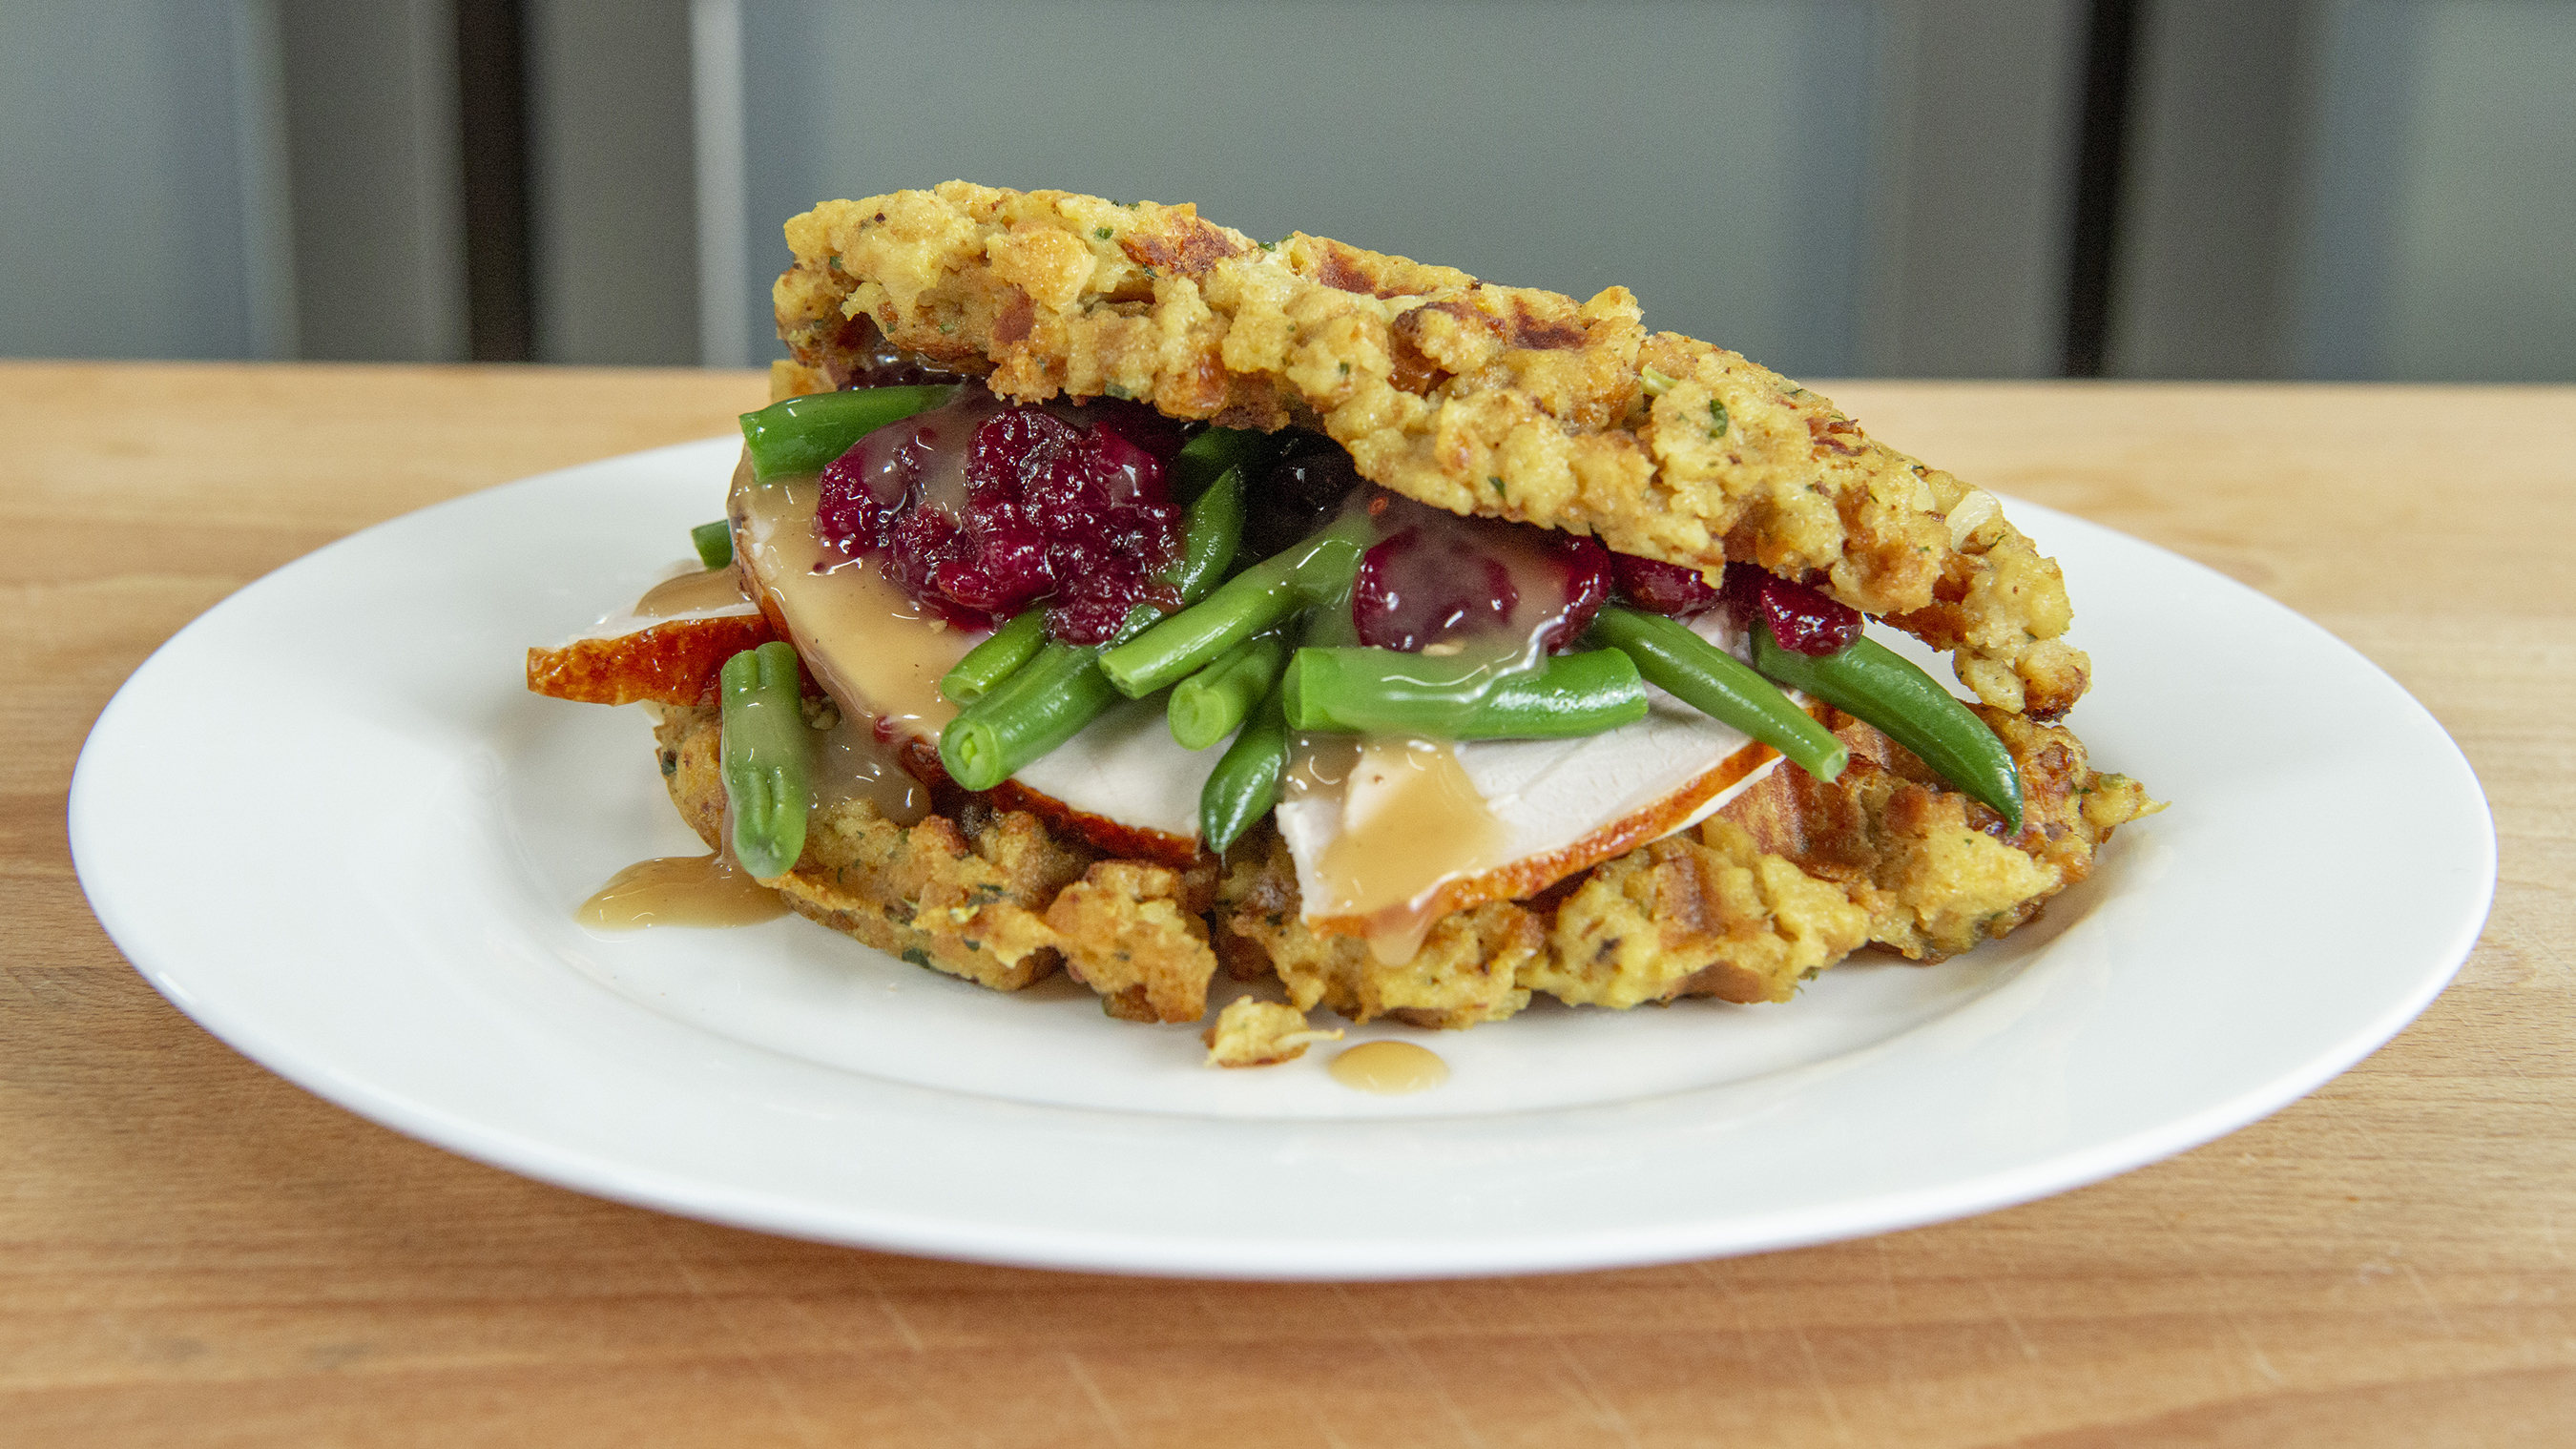 Butterball Introduces the Turkey Talk-Line Taste Kitchen to Inspire Thanksgiving Hosts